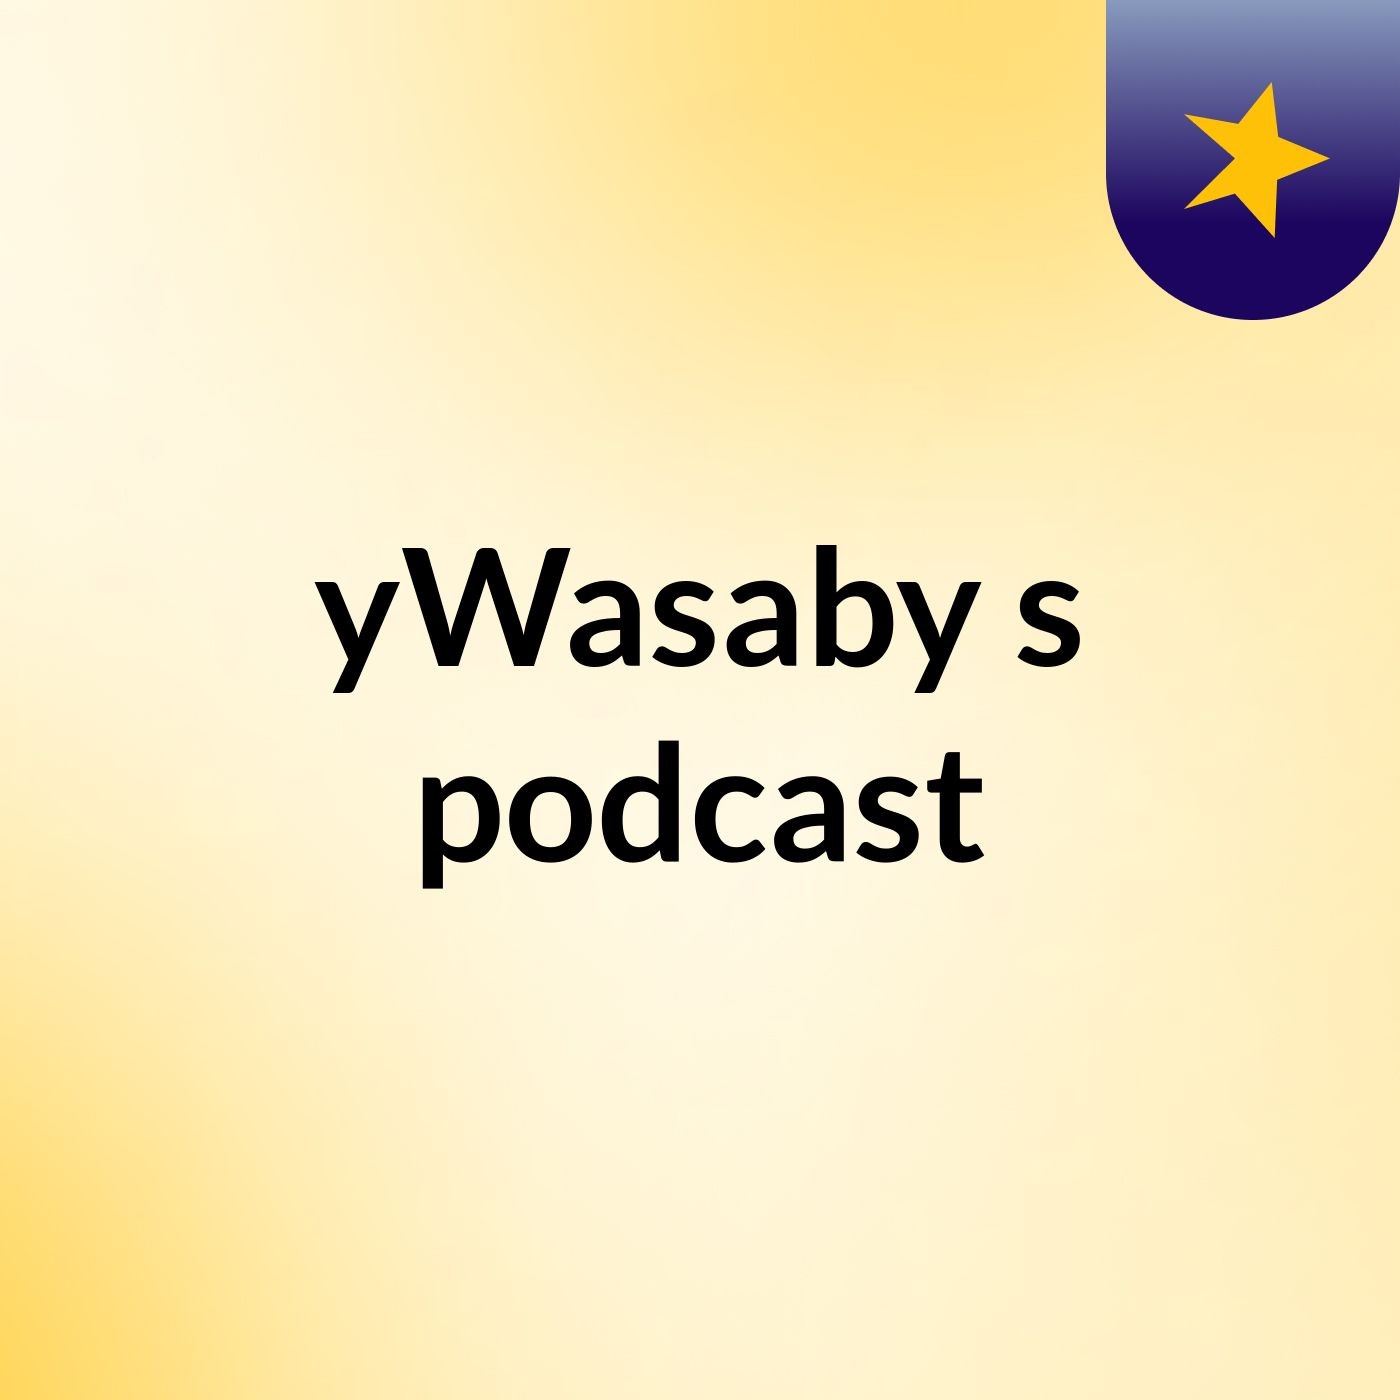 yWasaby's podcast